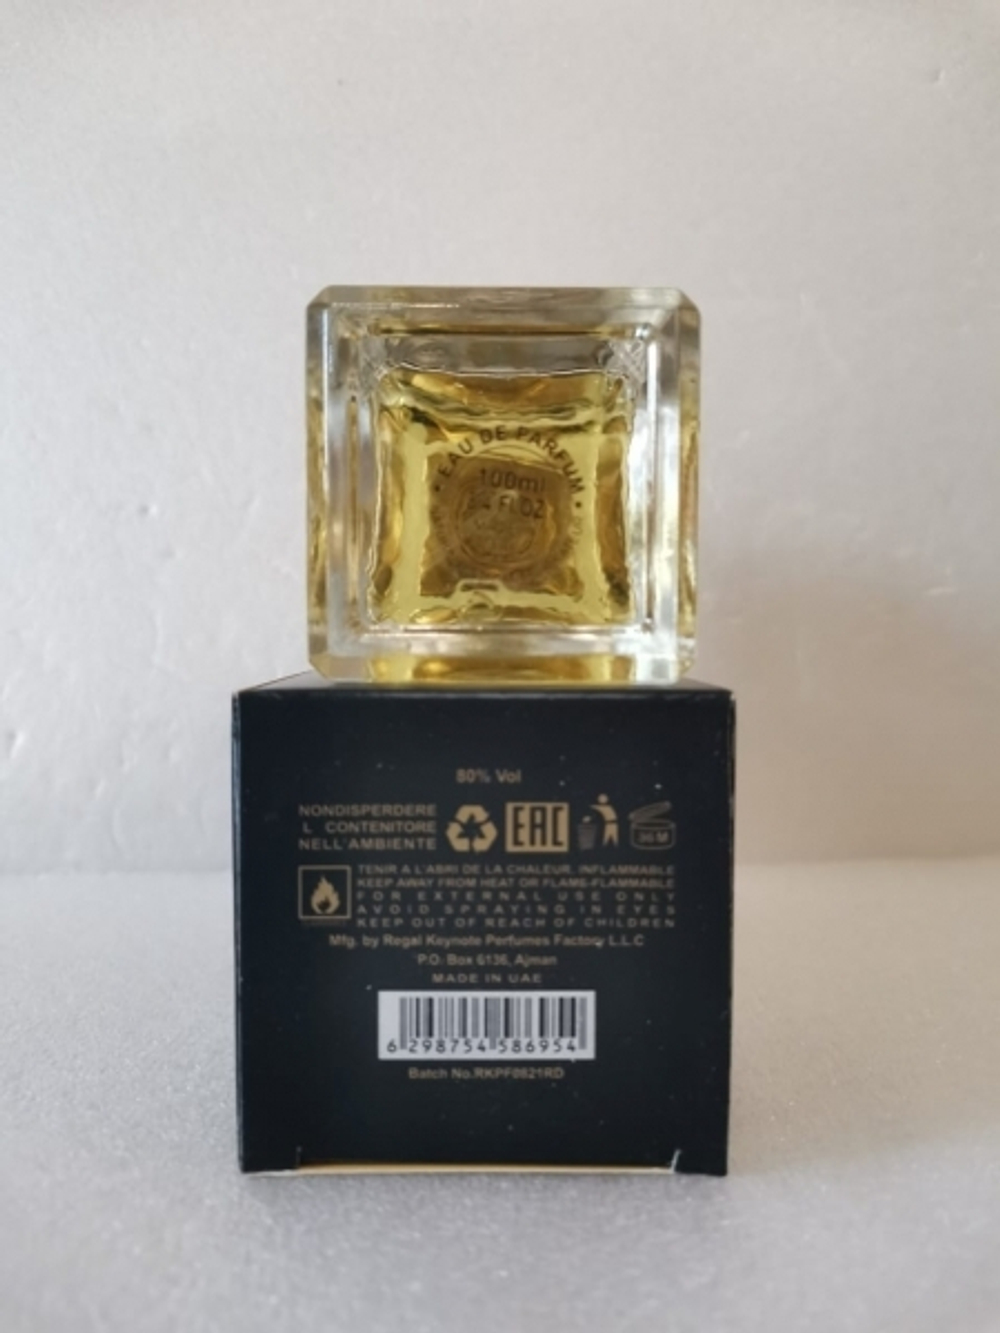 RicHard Gold Rush 100 ml (duty free парфюмерия)